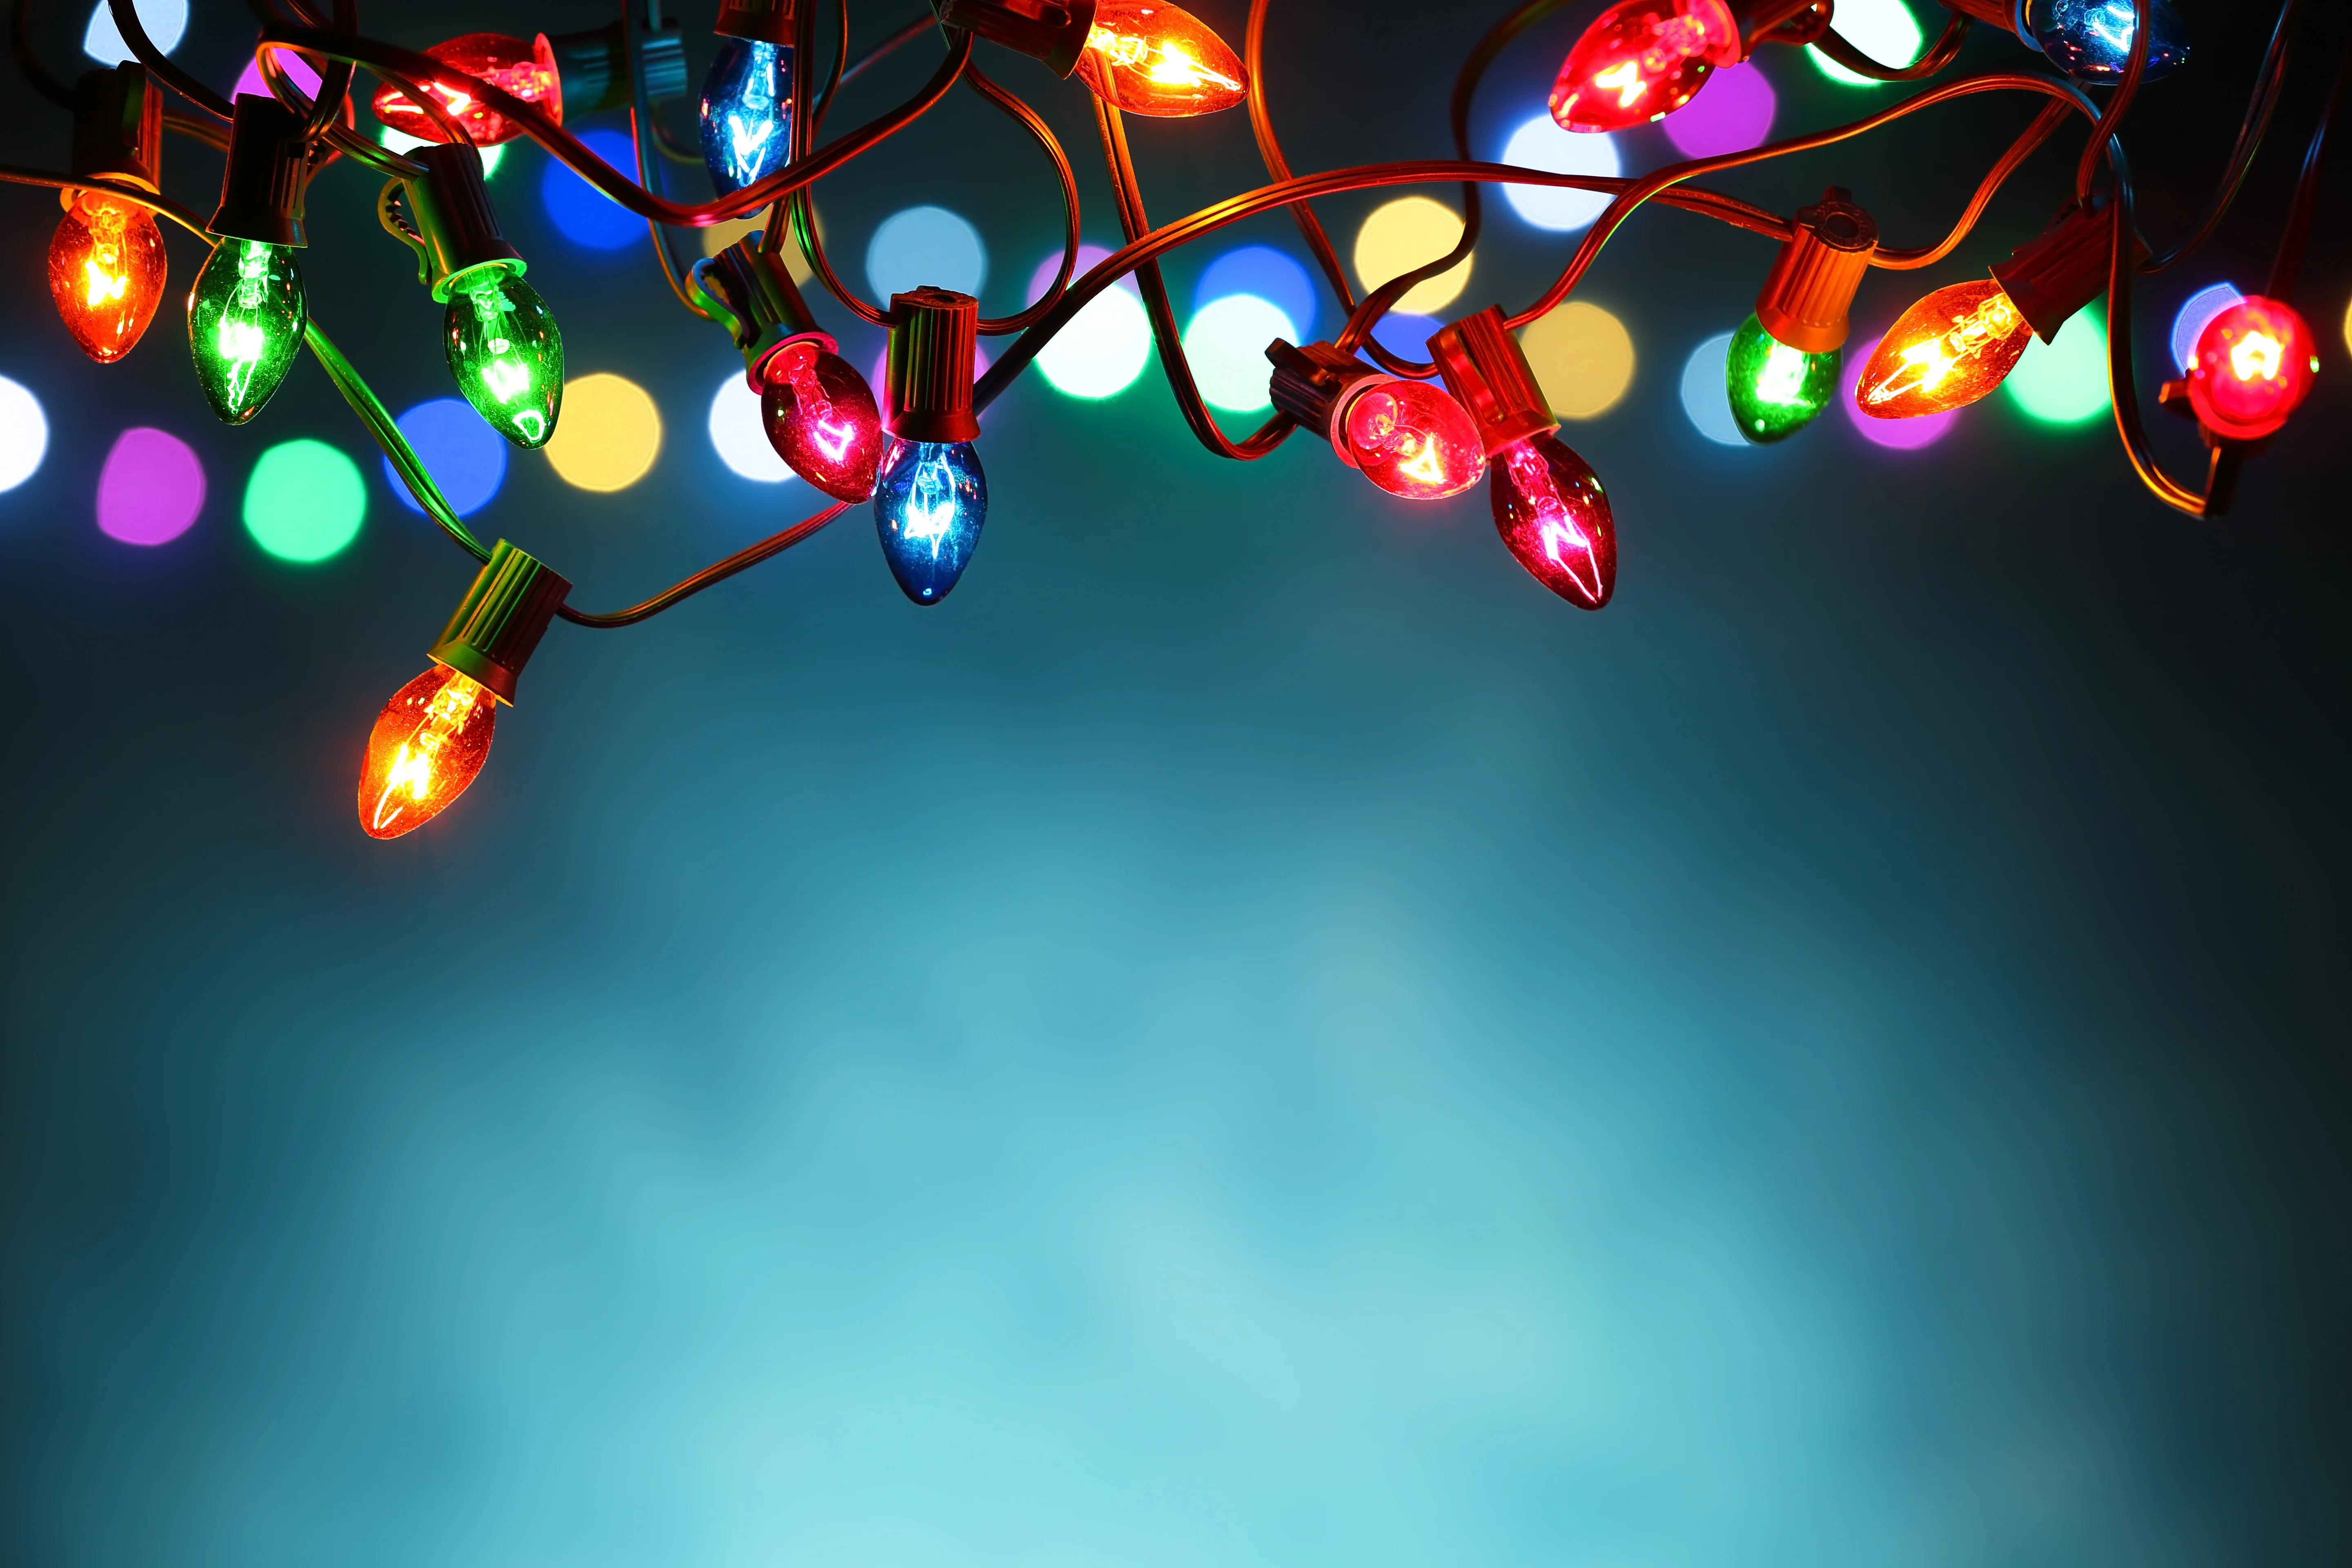 Cartoon Christmas lights against blue background